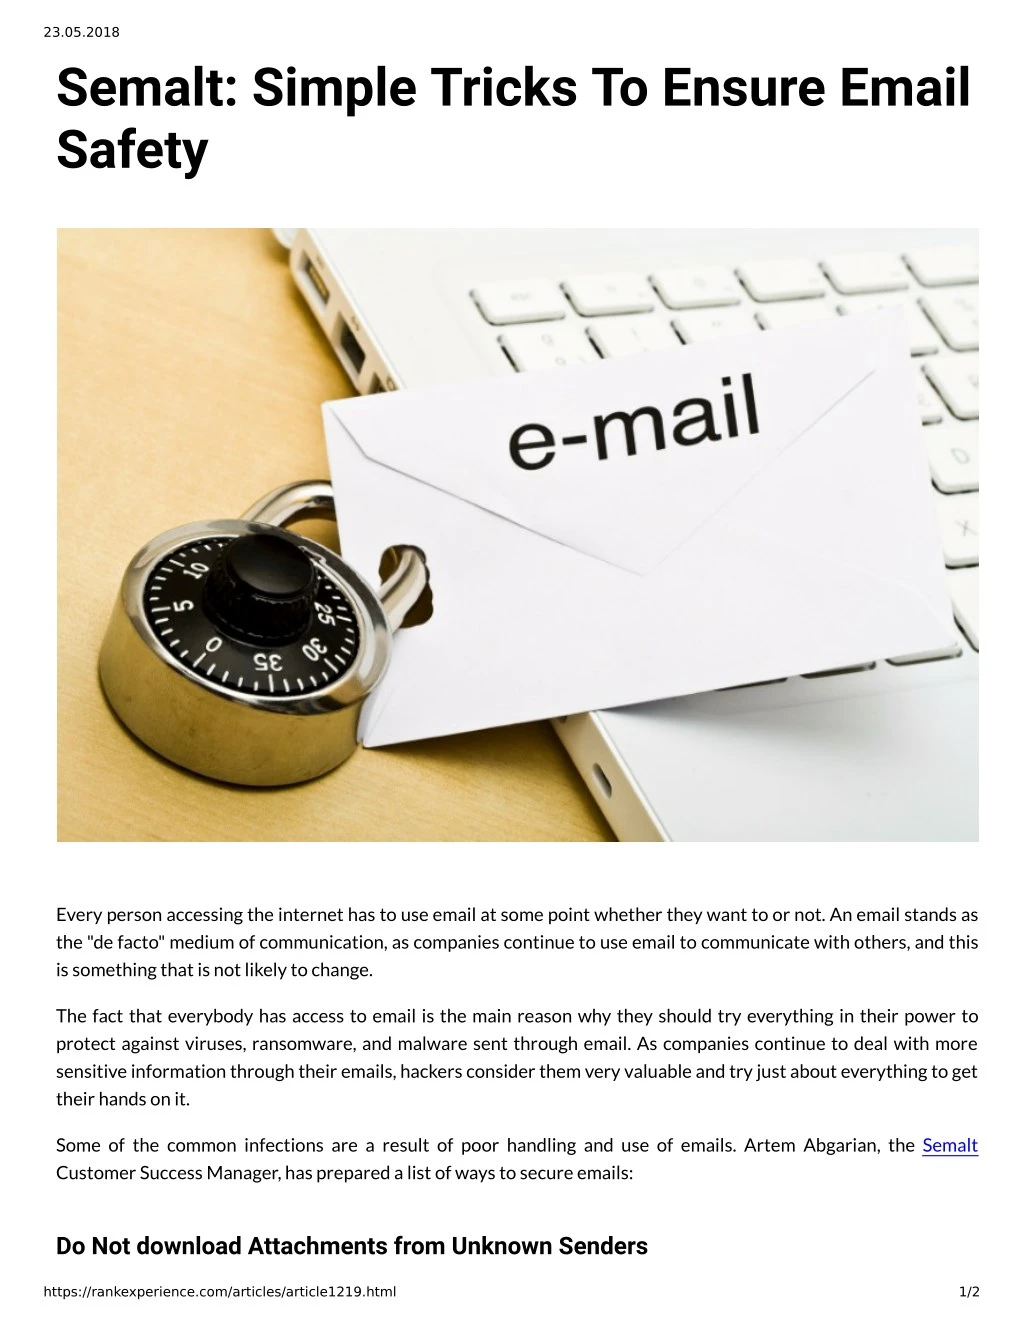 23 05 2018 semalt simple tricks to ensure email